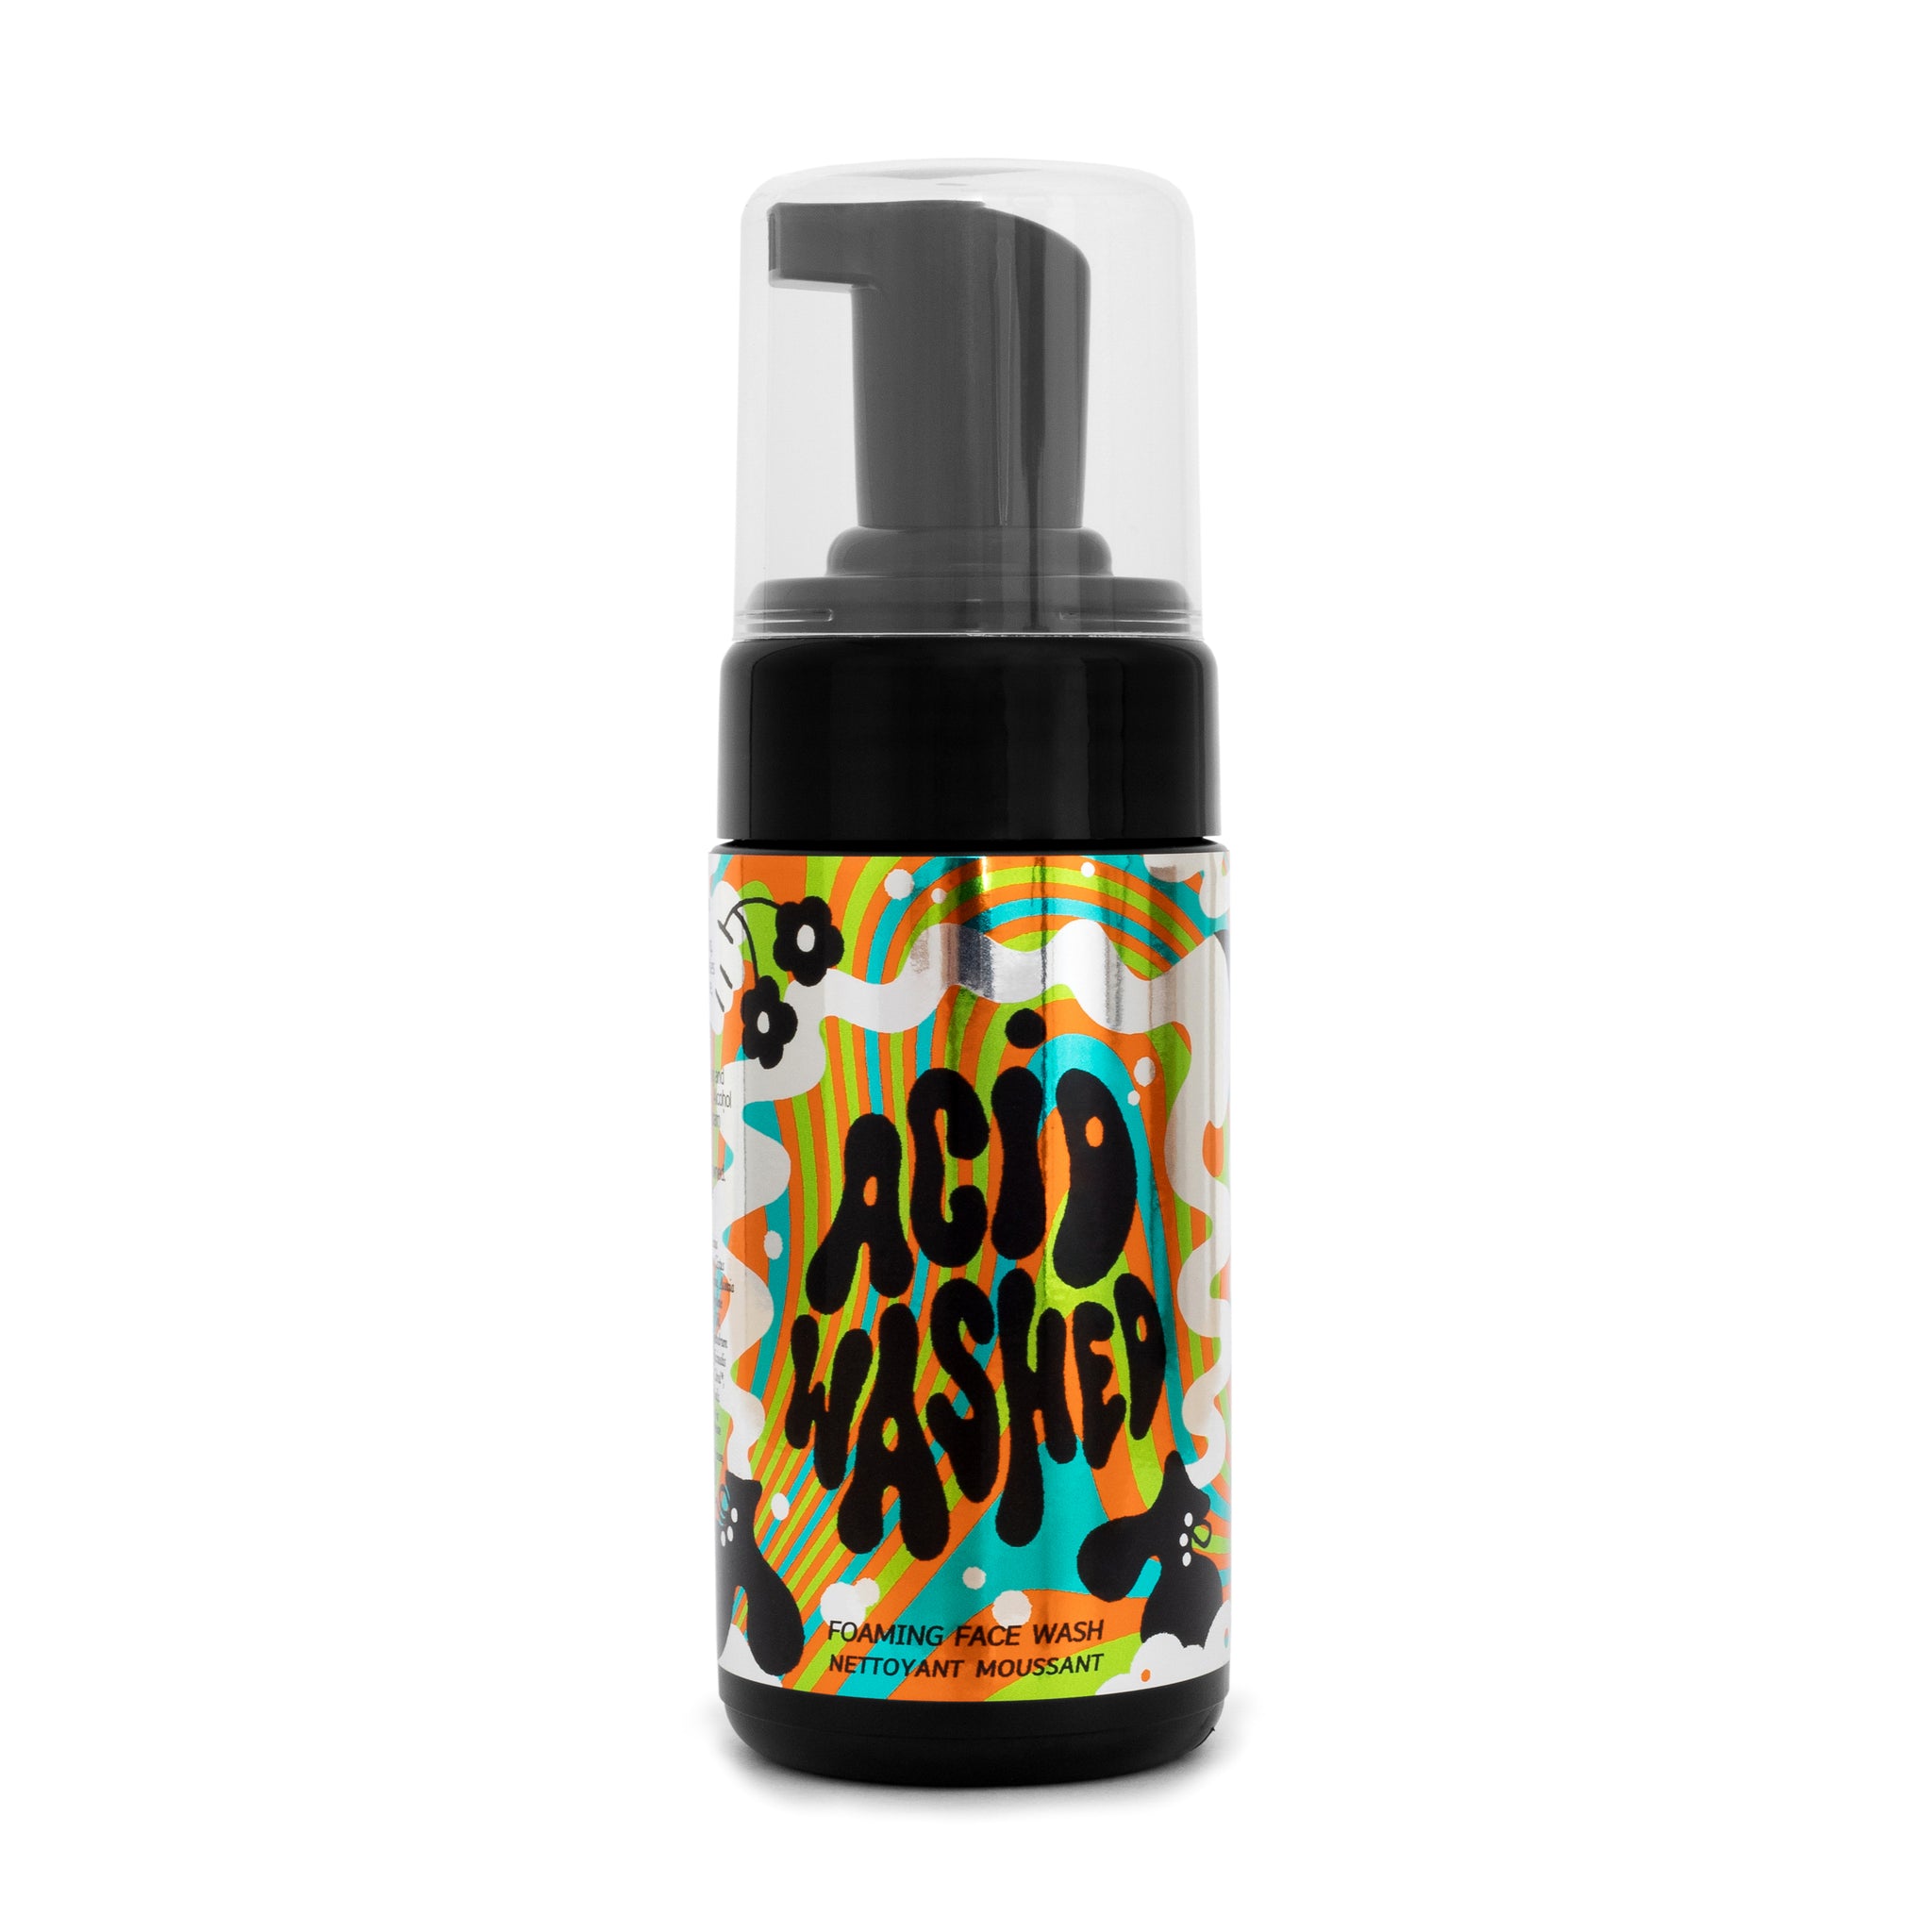 Acid Washed Foaming Facial Cleanser / Gesichtsreiniger mit AHA